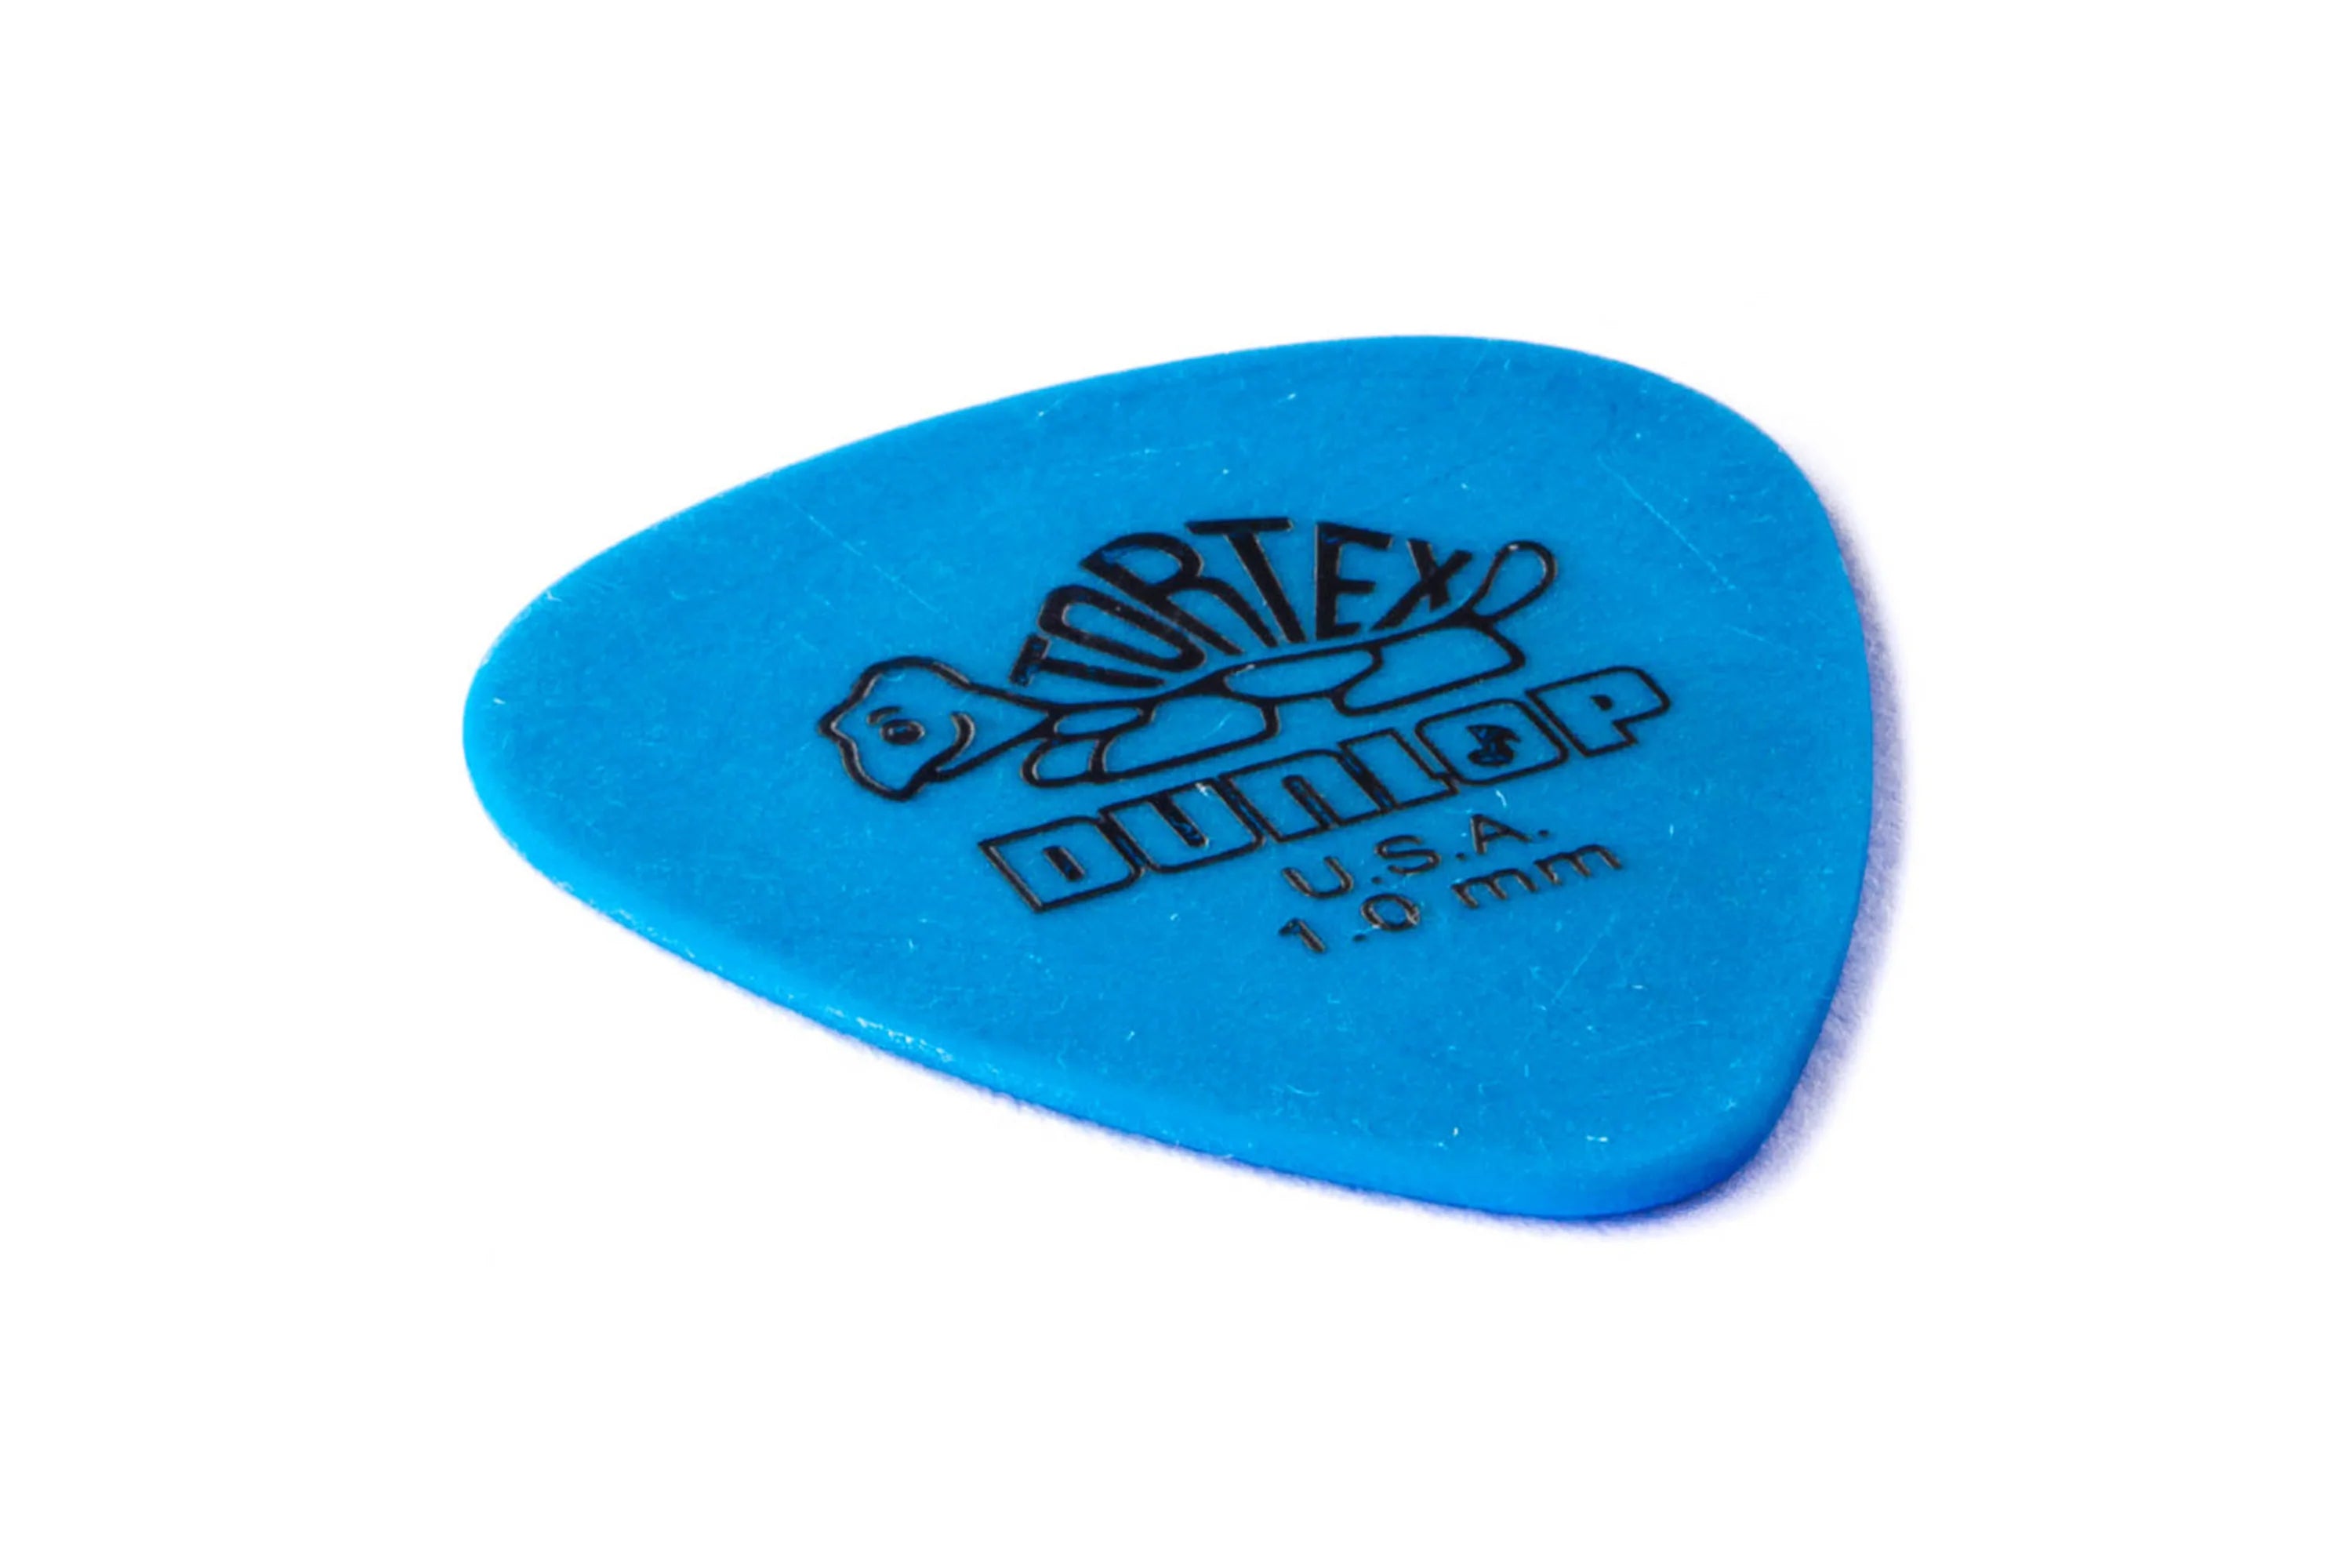 Dunlop Tortex® Standard 1.0mm Blue Guitar & Ukulele Pick - SINGLE PICK